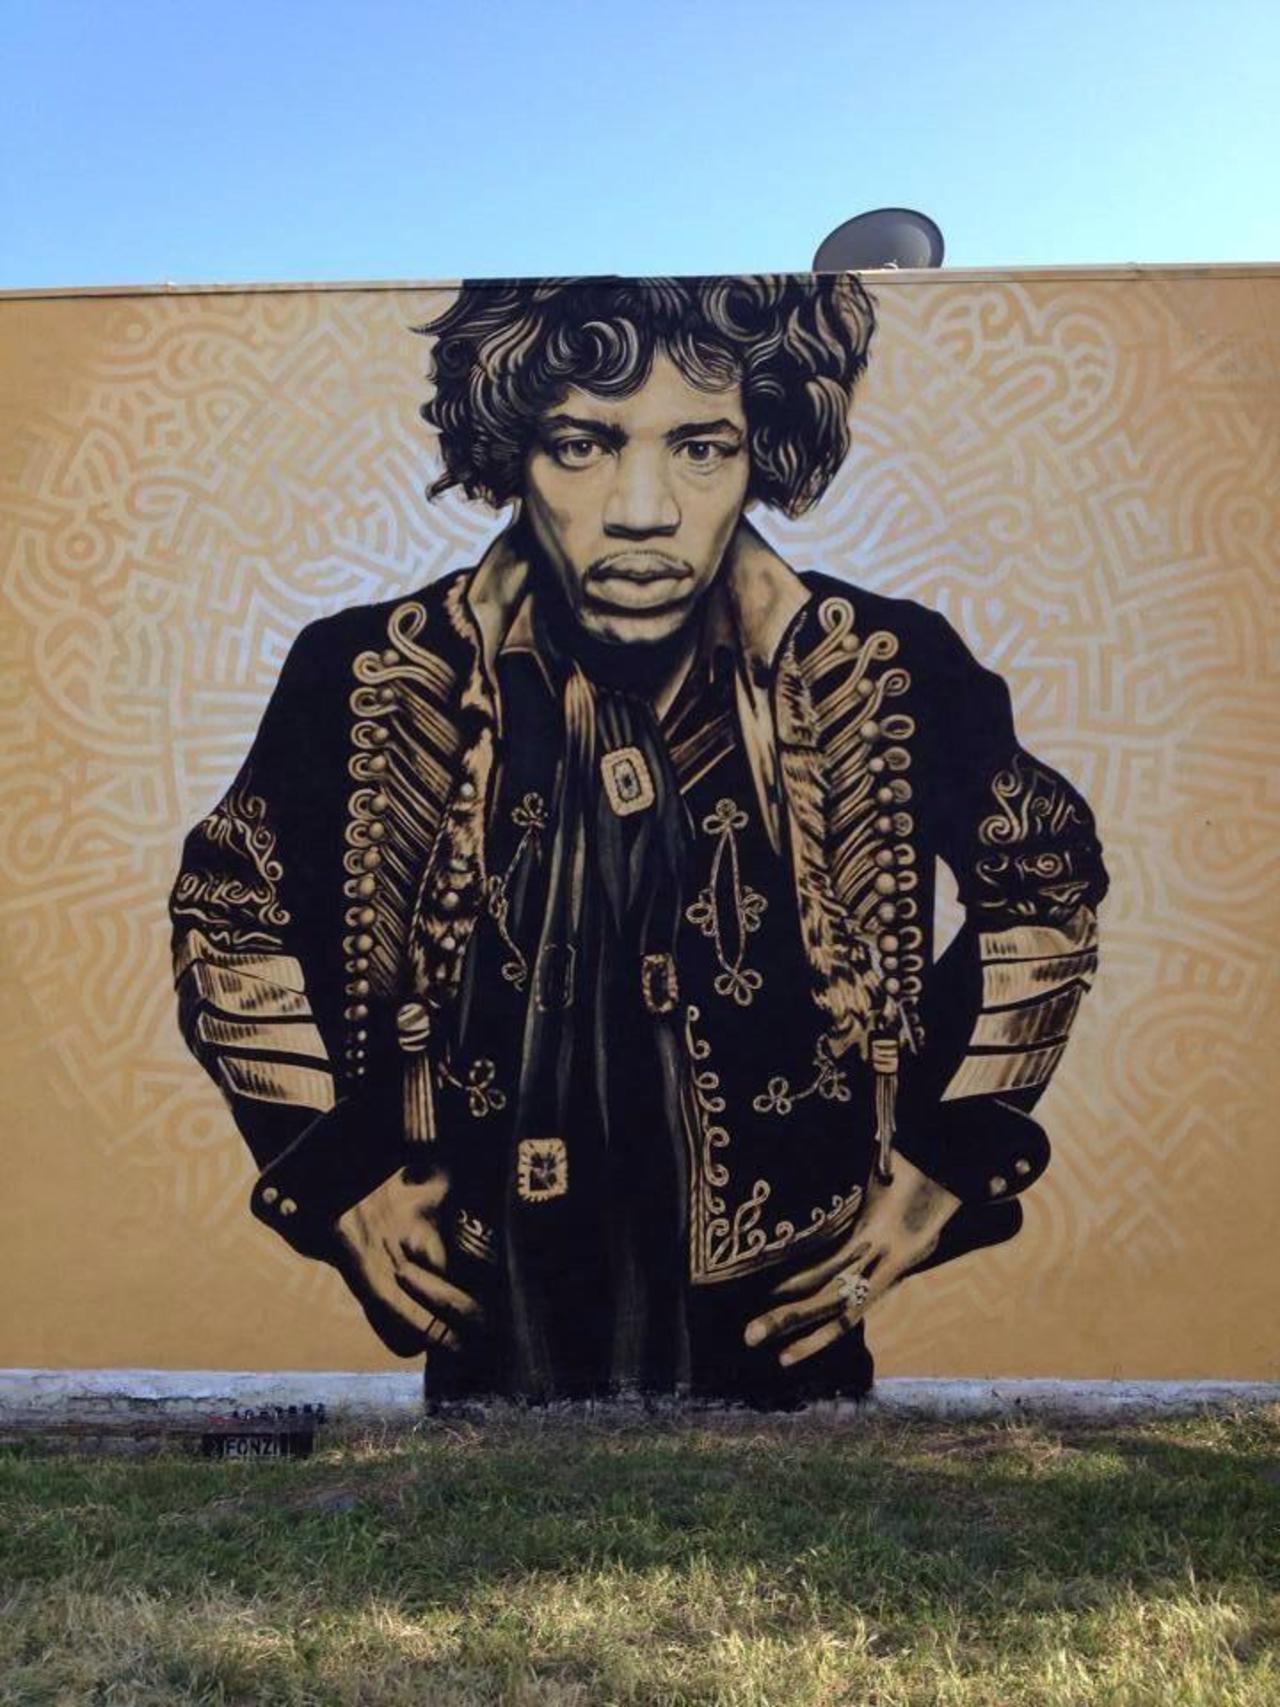 RT @GoogleStreetArt: Artist 'Levi Fonz Ponce' realistic Street Art mural of Jimi Hendrix in Hollywood

#art #graffiti #mural #streetart http://t.co/oELlZszJWF